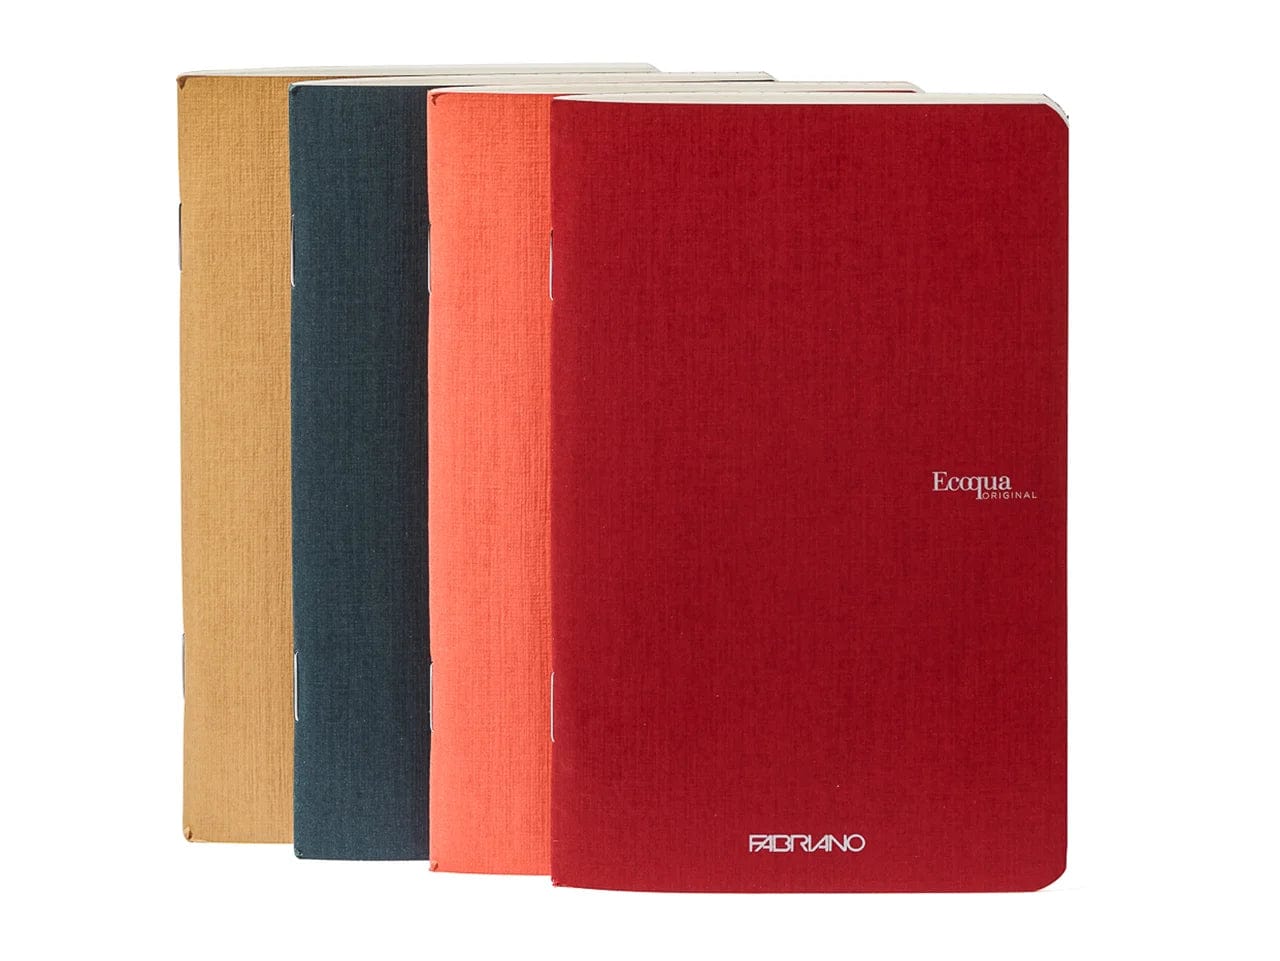 FABRIANO Ecoqua - Pad Set MUTED COLOURS Fabriano - EcoQua - Pocket Size Blank Notepads - Sets of 4